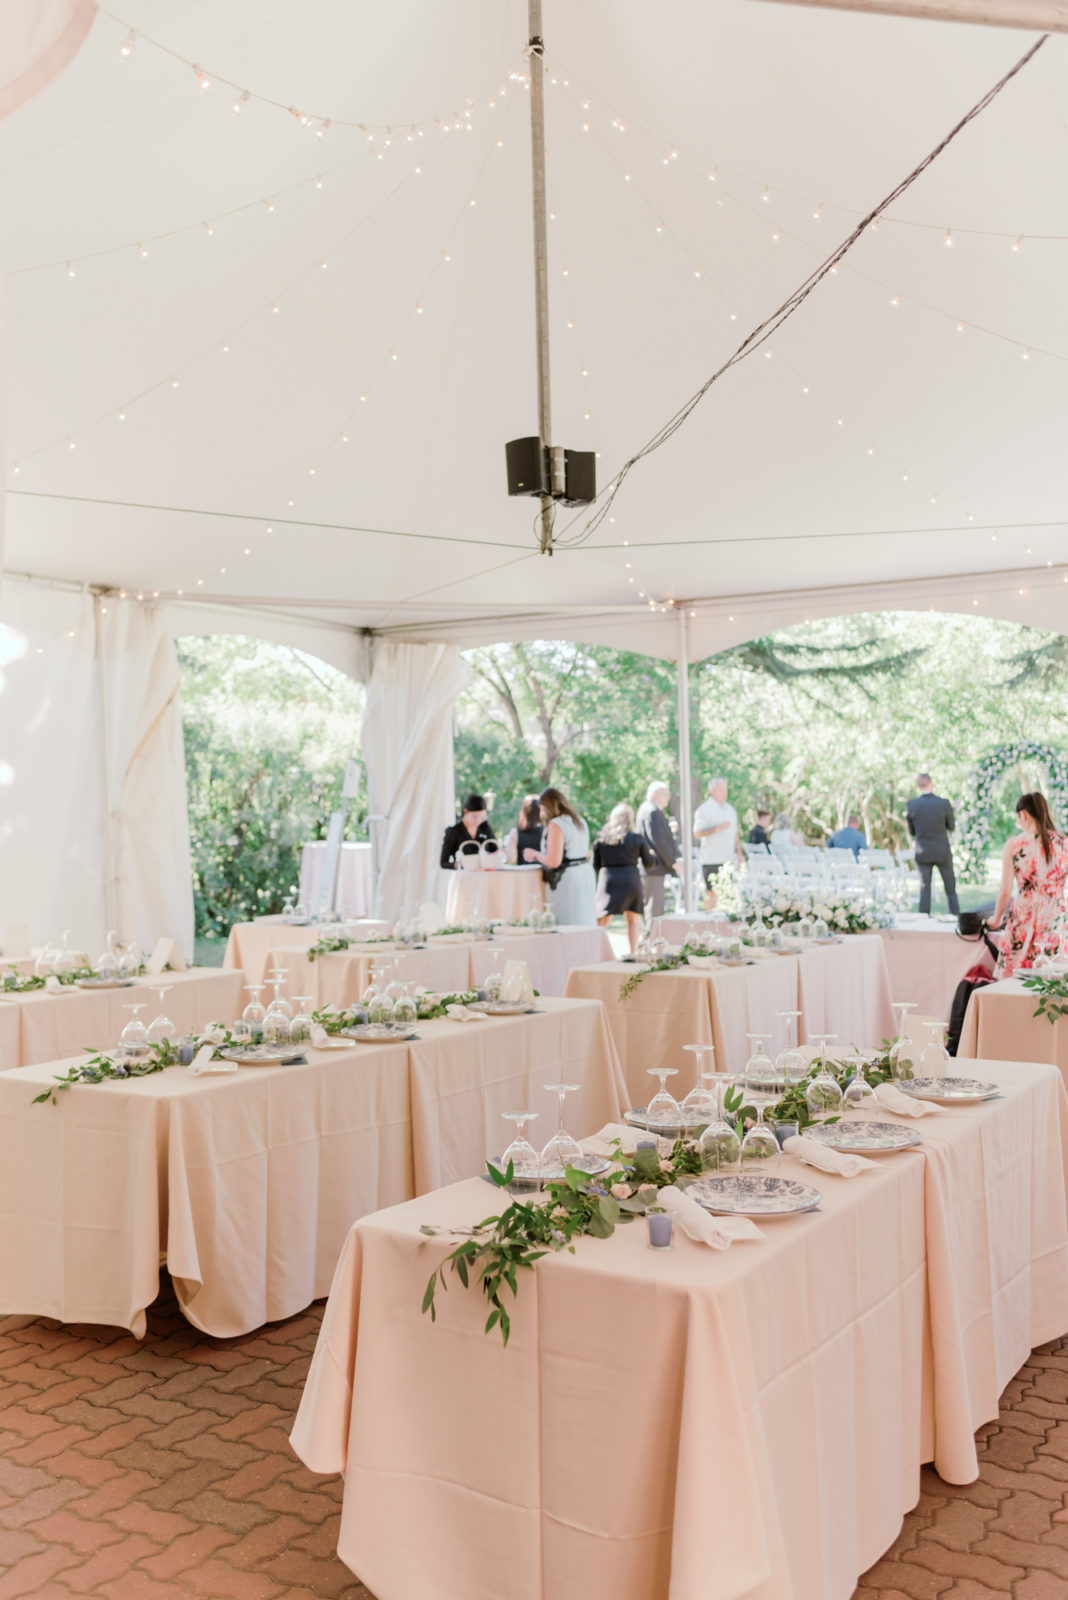 Wedding reception design inspiration for a white tent outdoor summer wedding